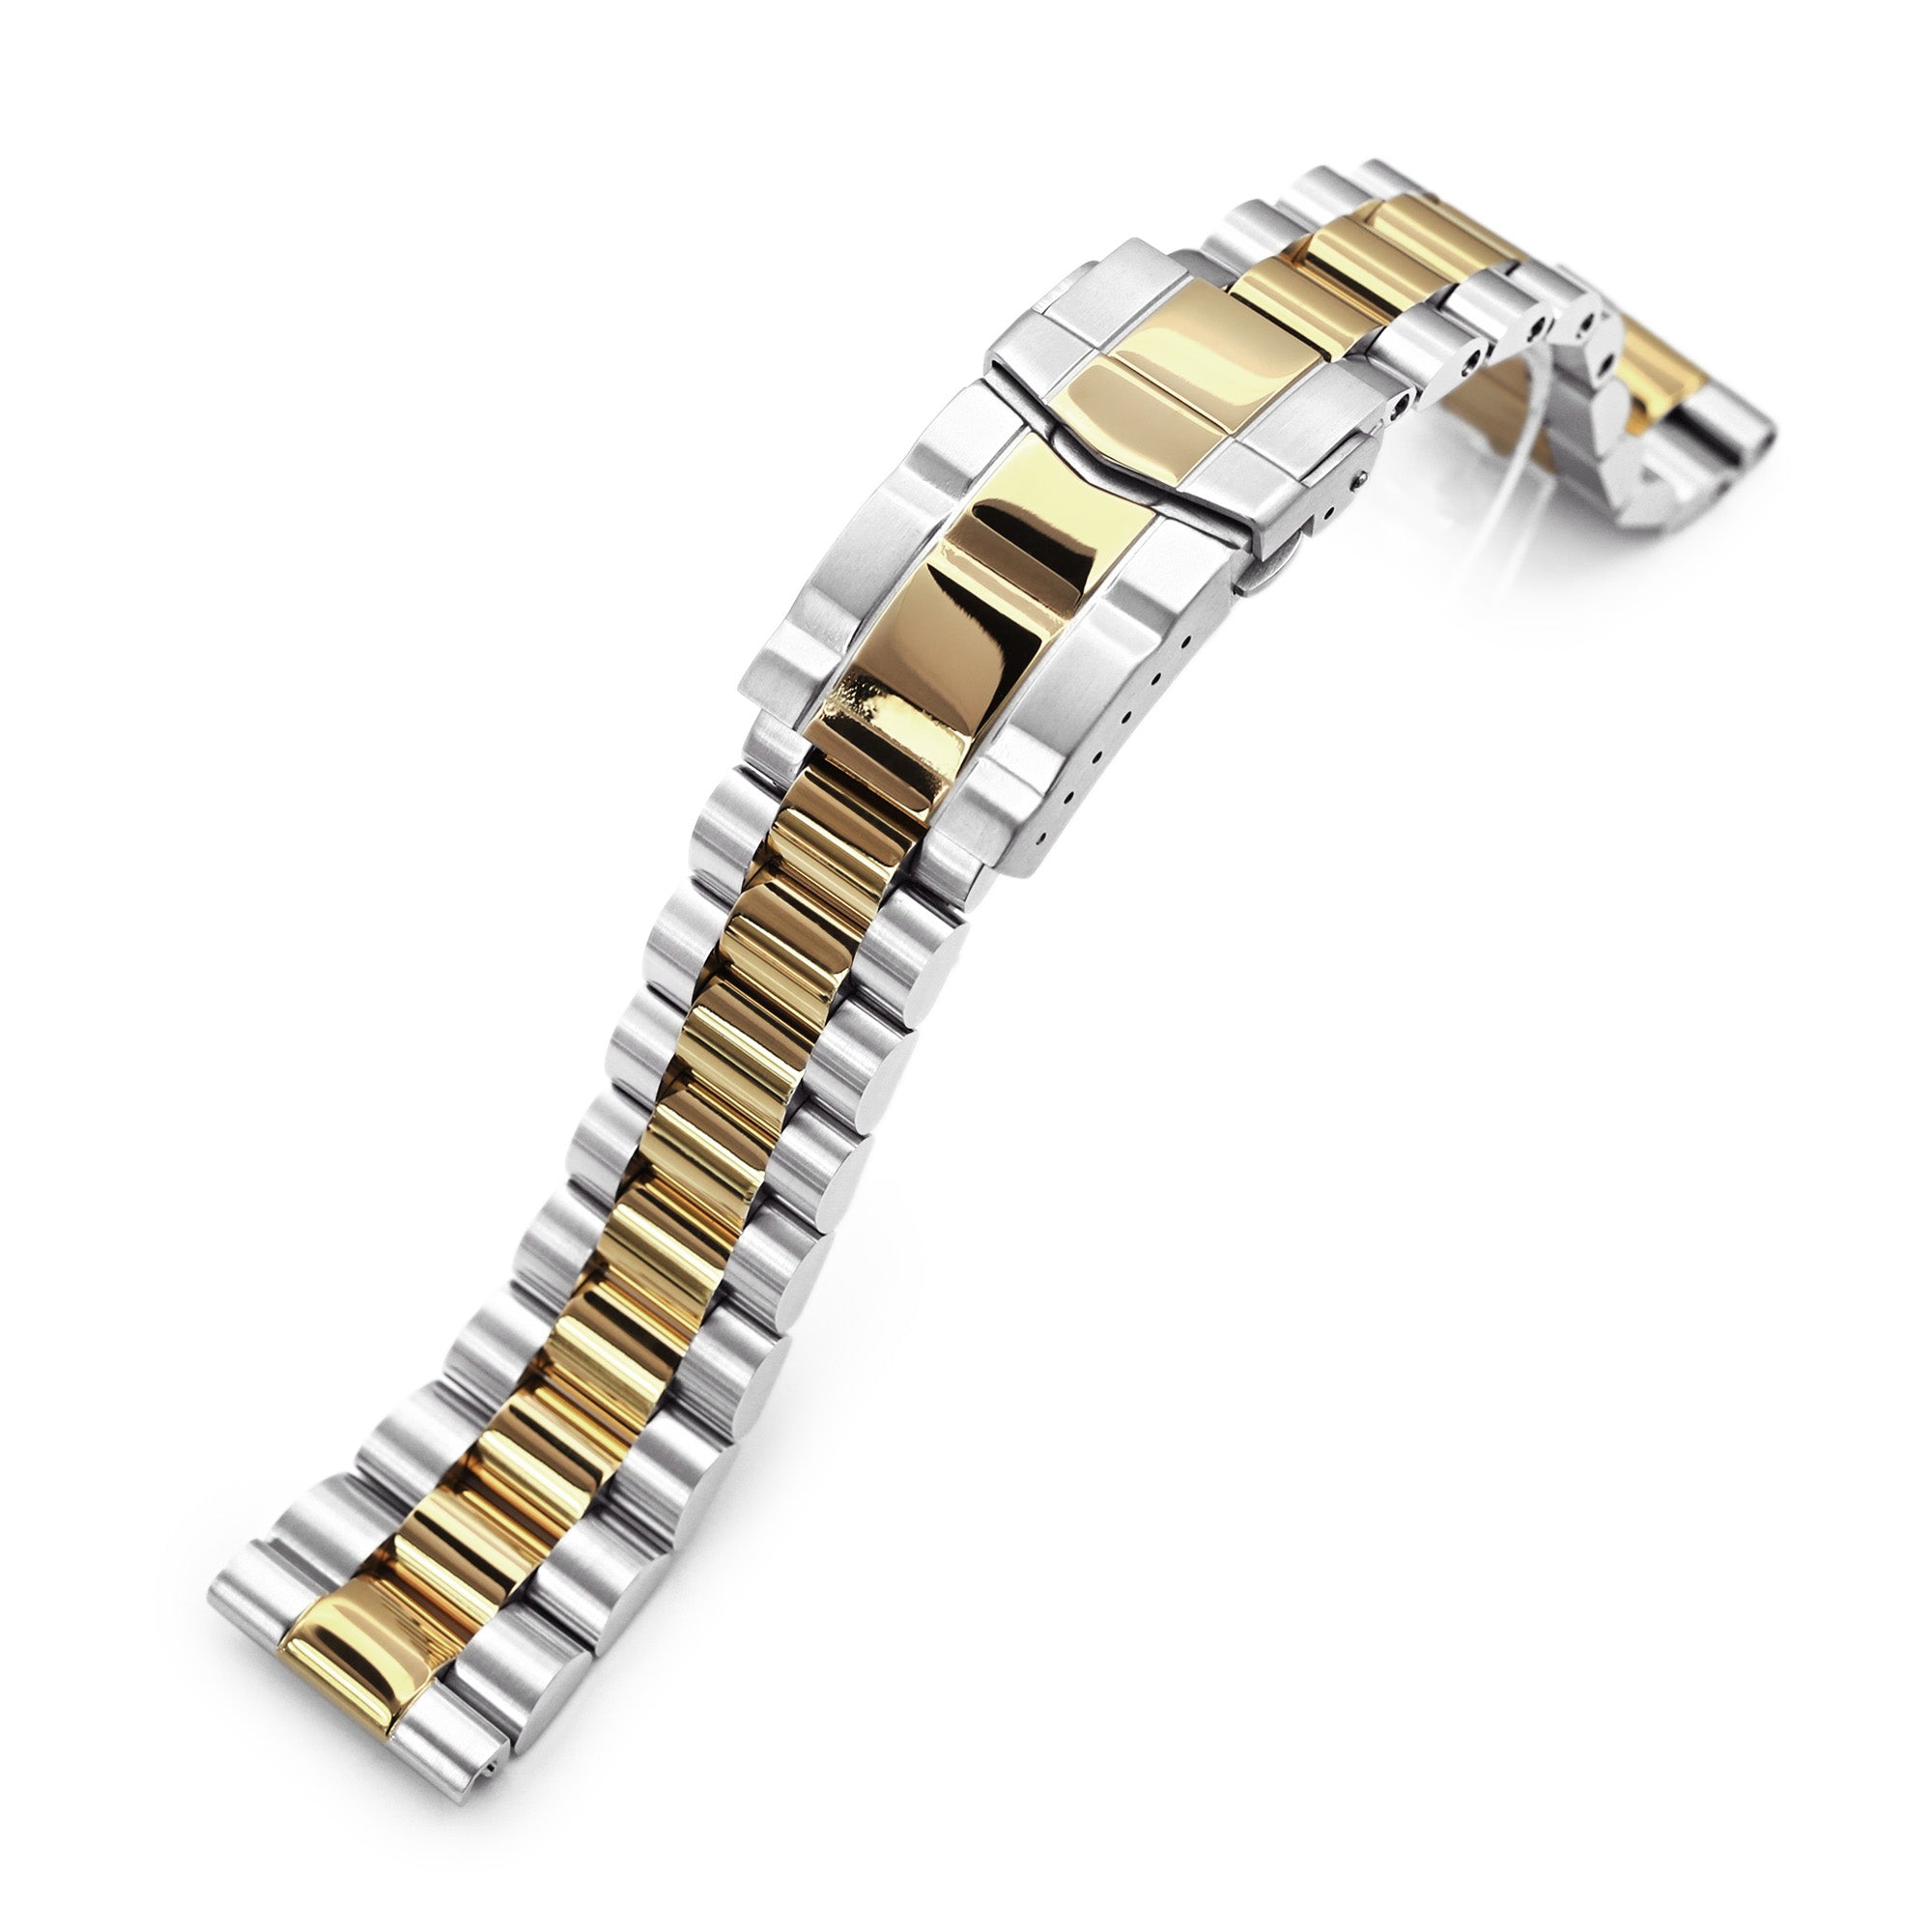 Straight End 22mm Stainless Steel Endmill Bracelet